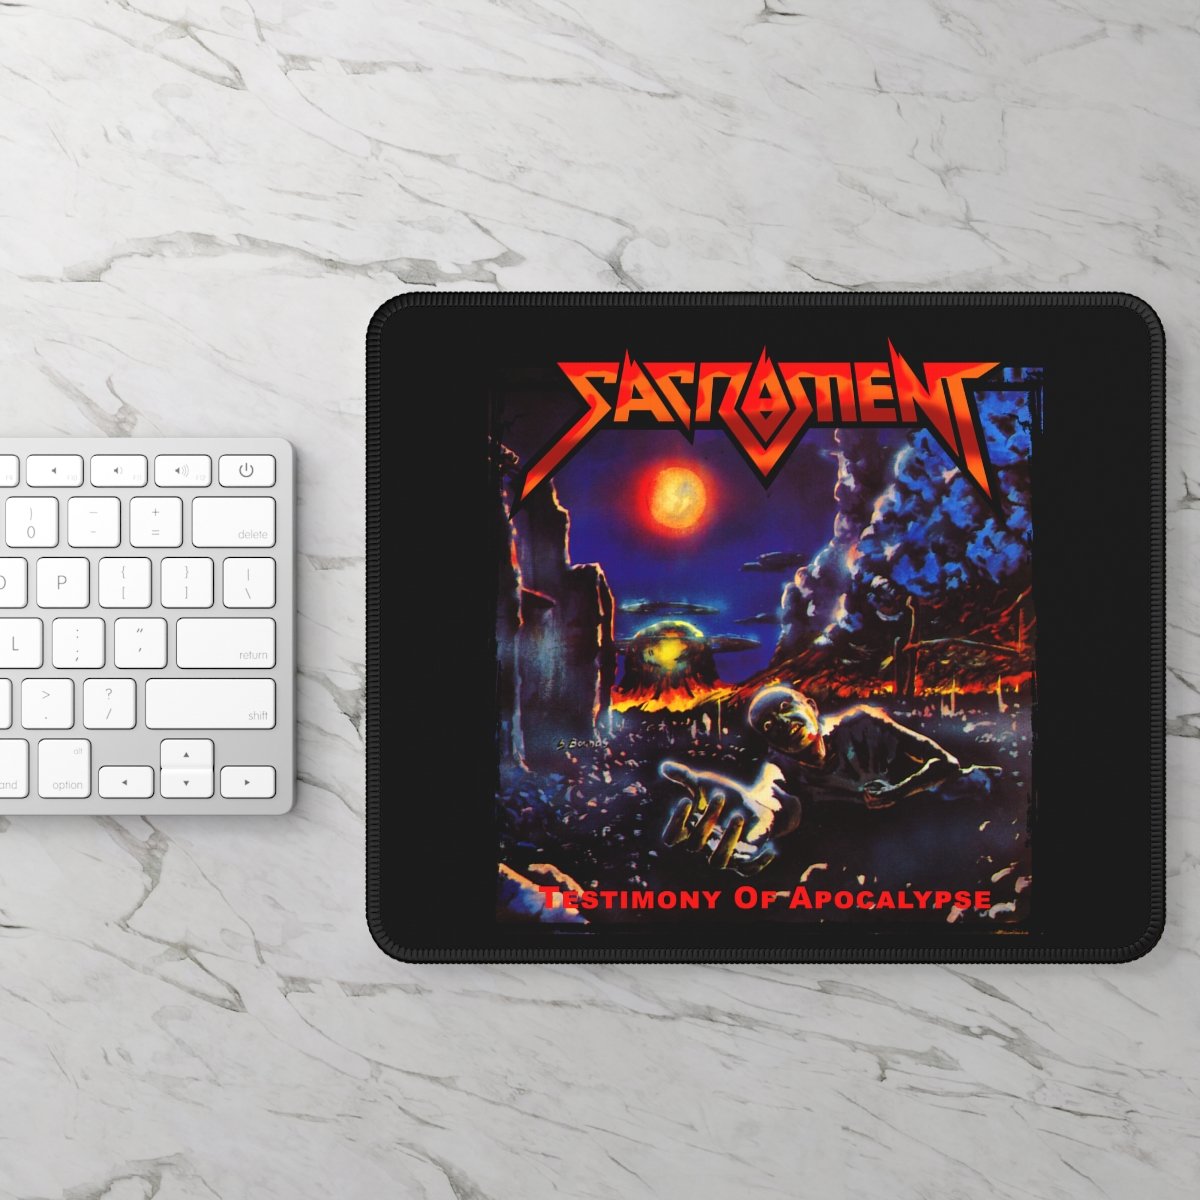 Sacrament – Testimony of Apocalypse Gaming Mouse Pad